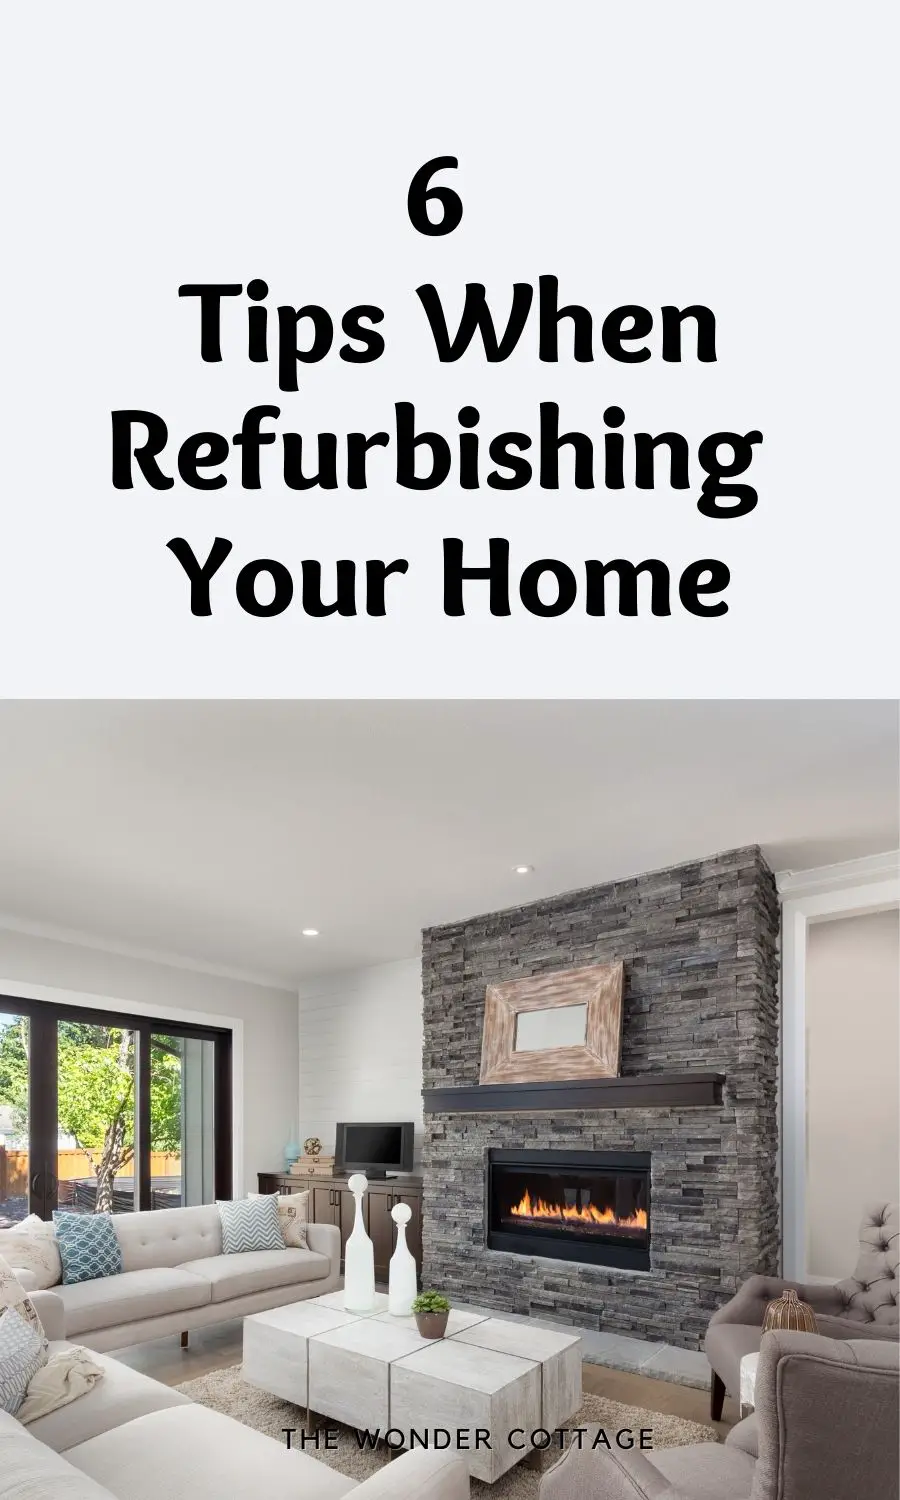 6 Tips When Refurbishing Your Home